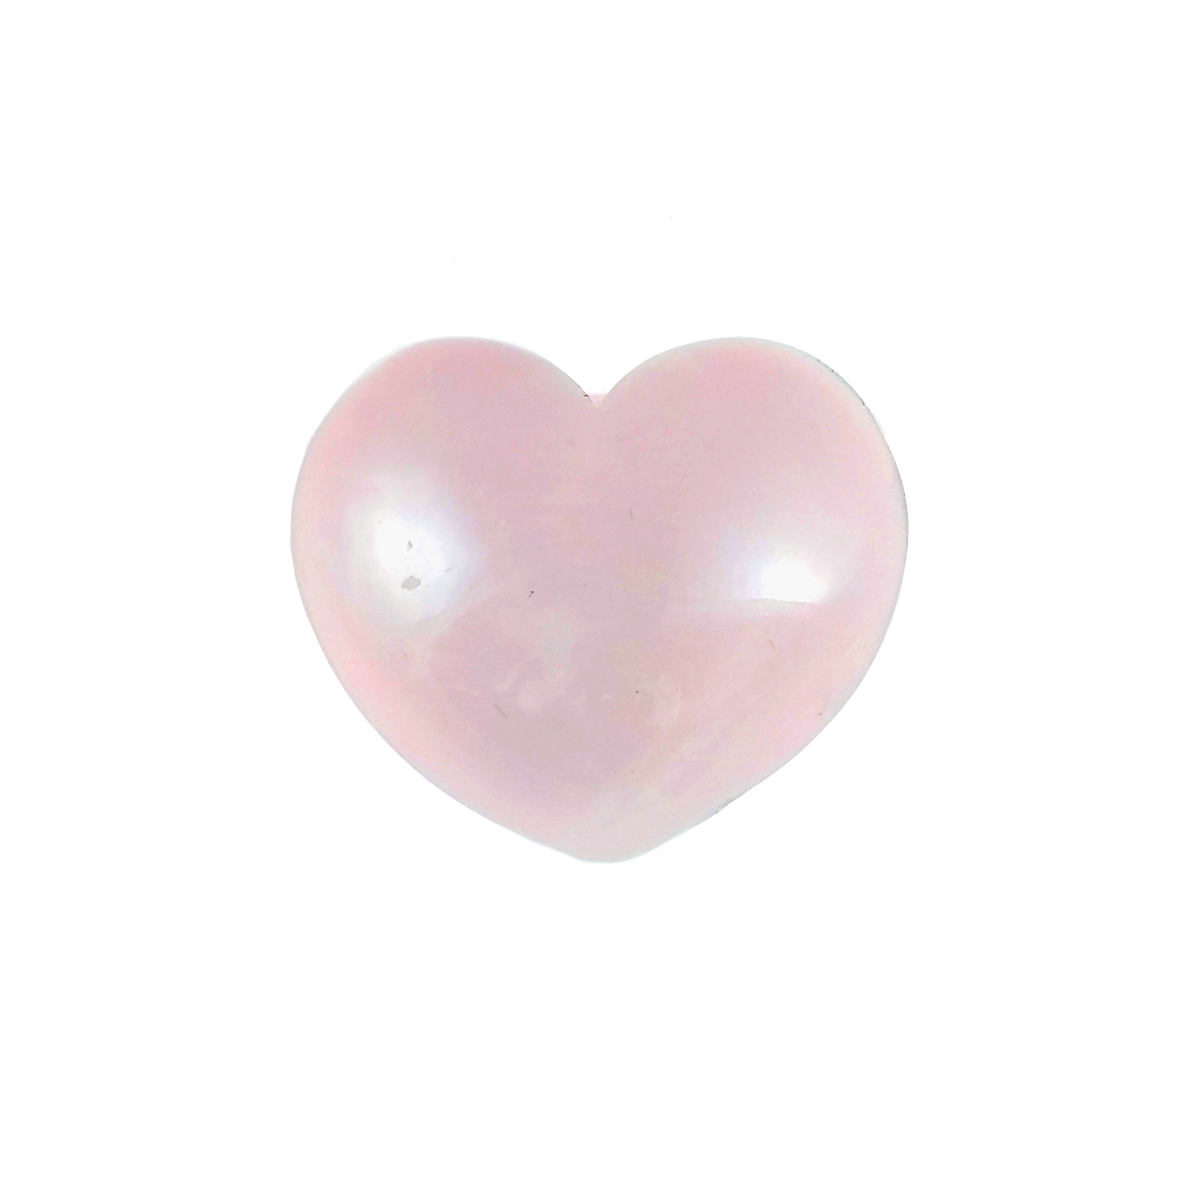 Rose Quartz heart - 1.25"